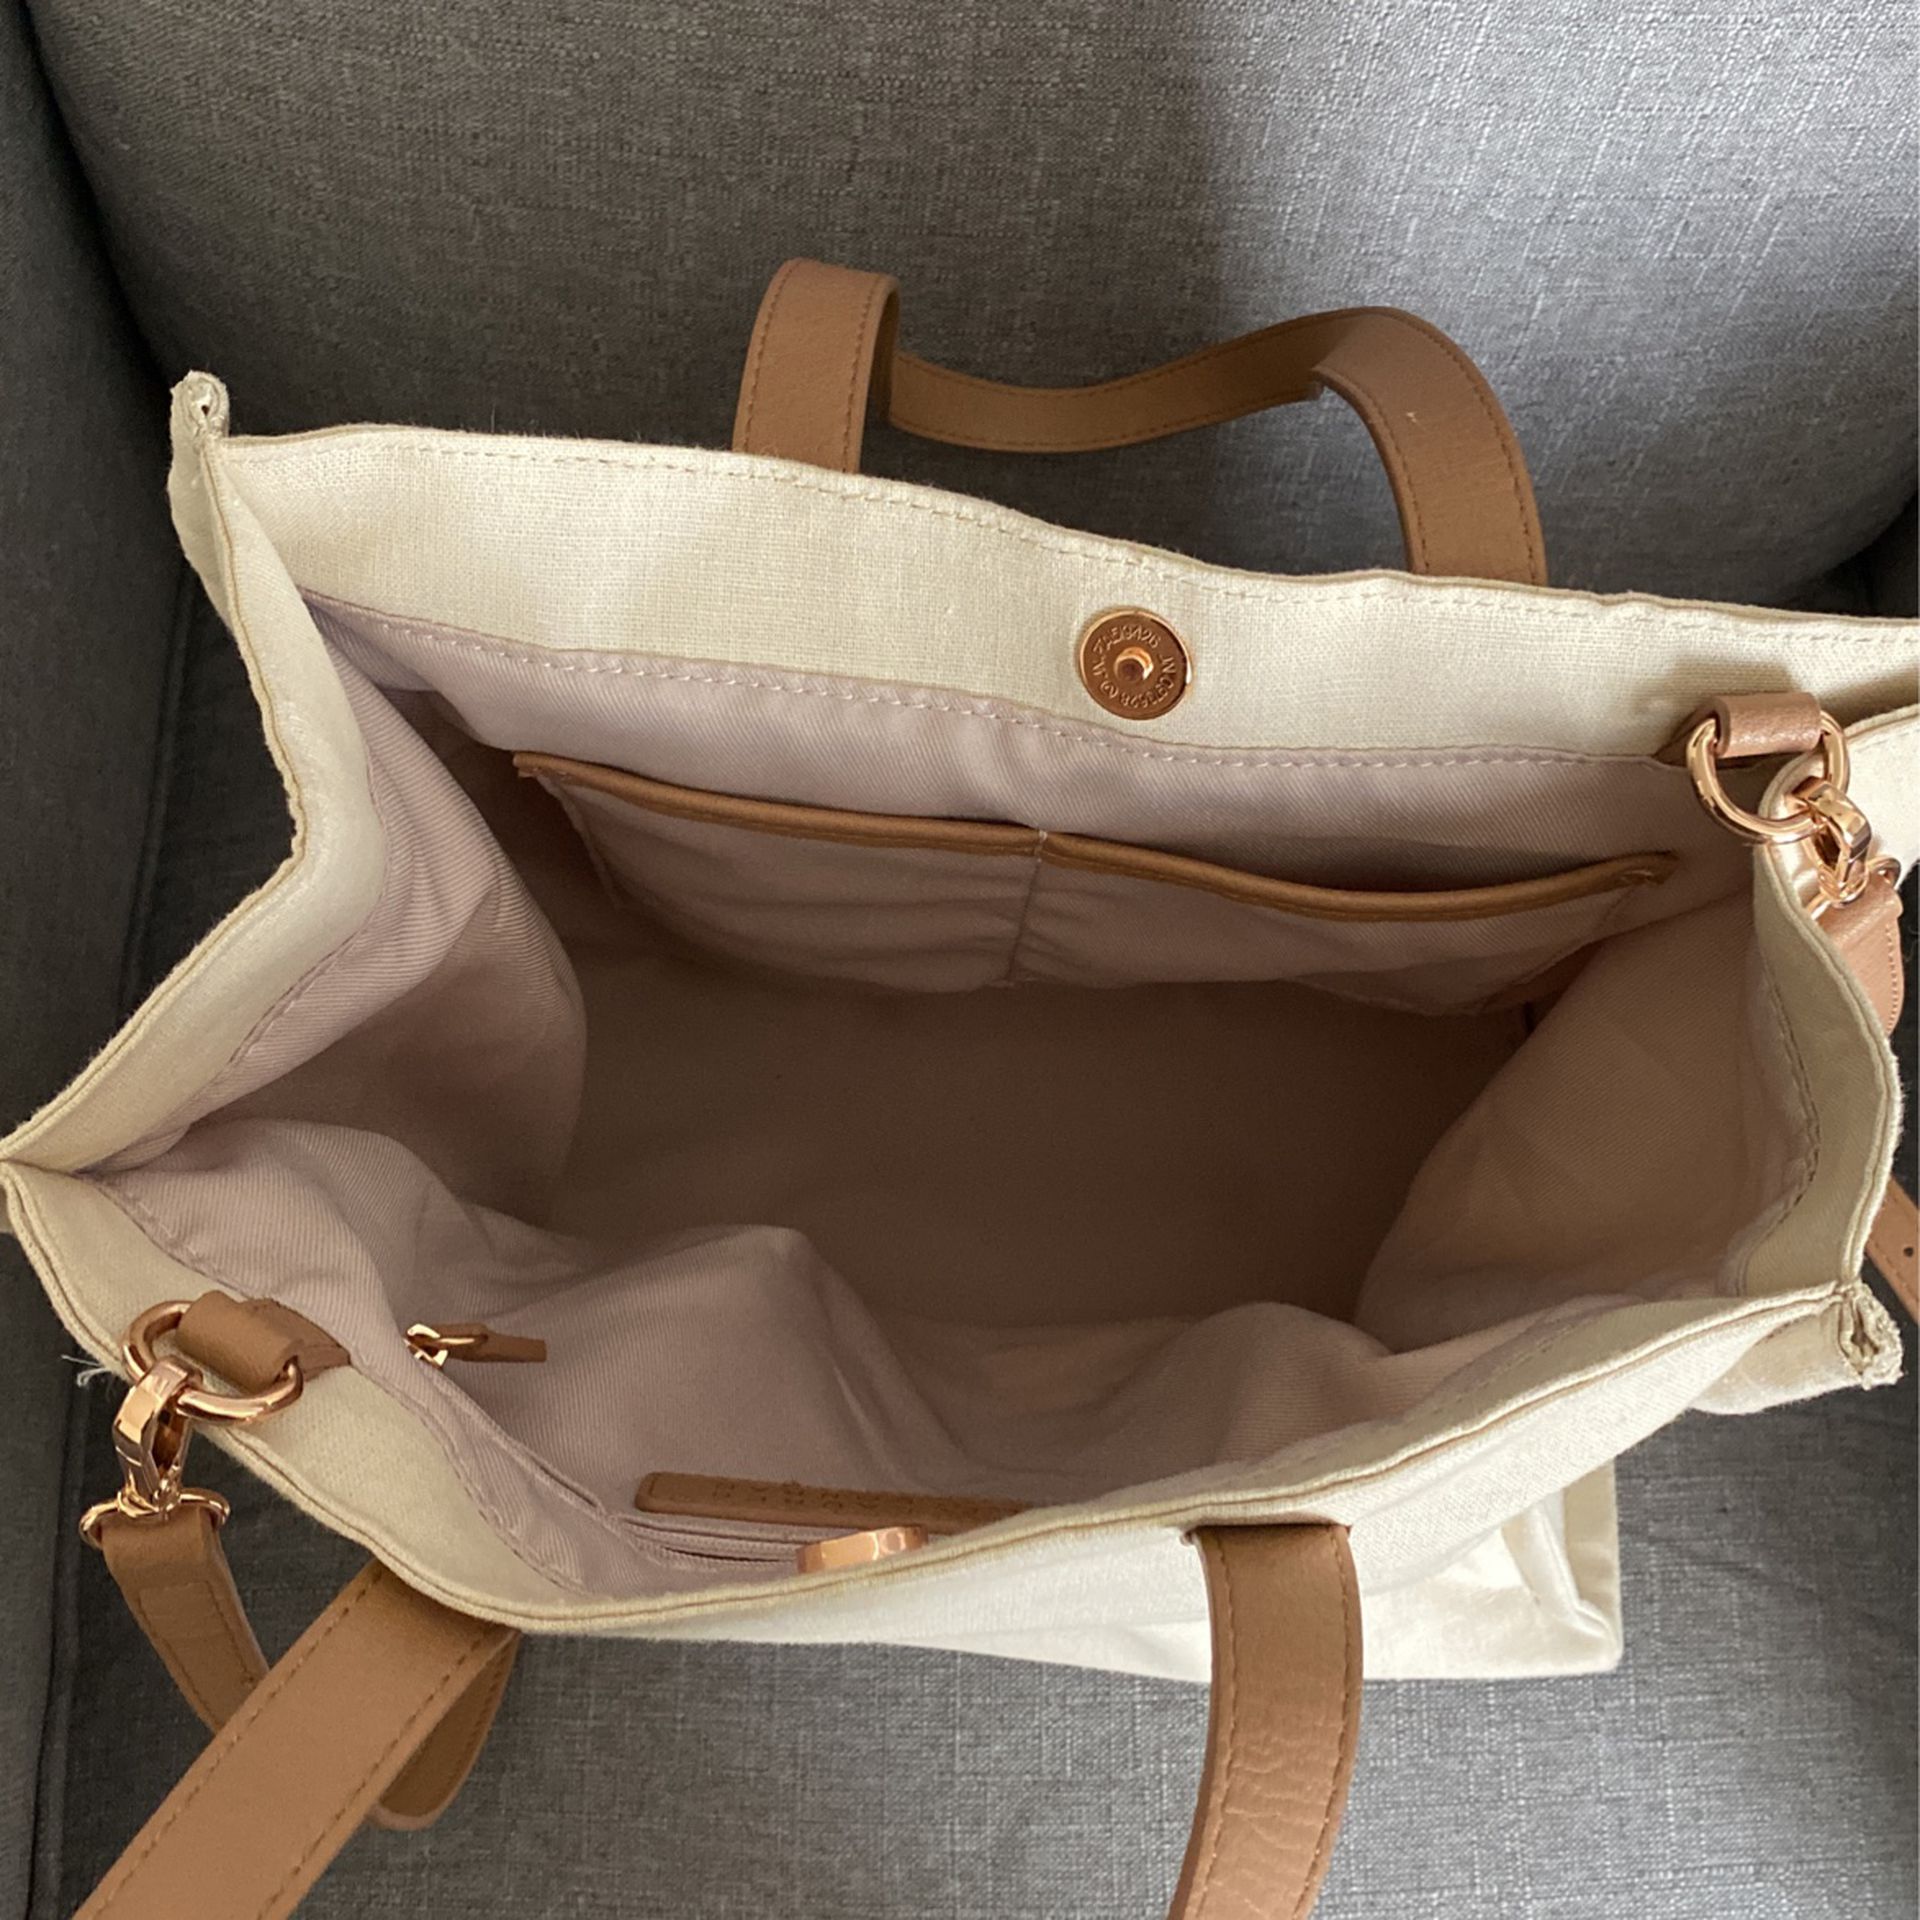 Lauren Conrad Woman's Purse Backpack for Sale in Riverside, CA - OfferUp